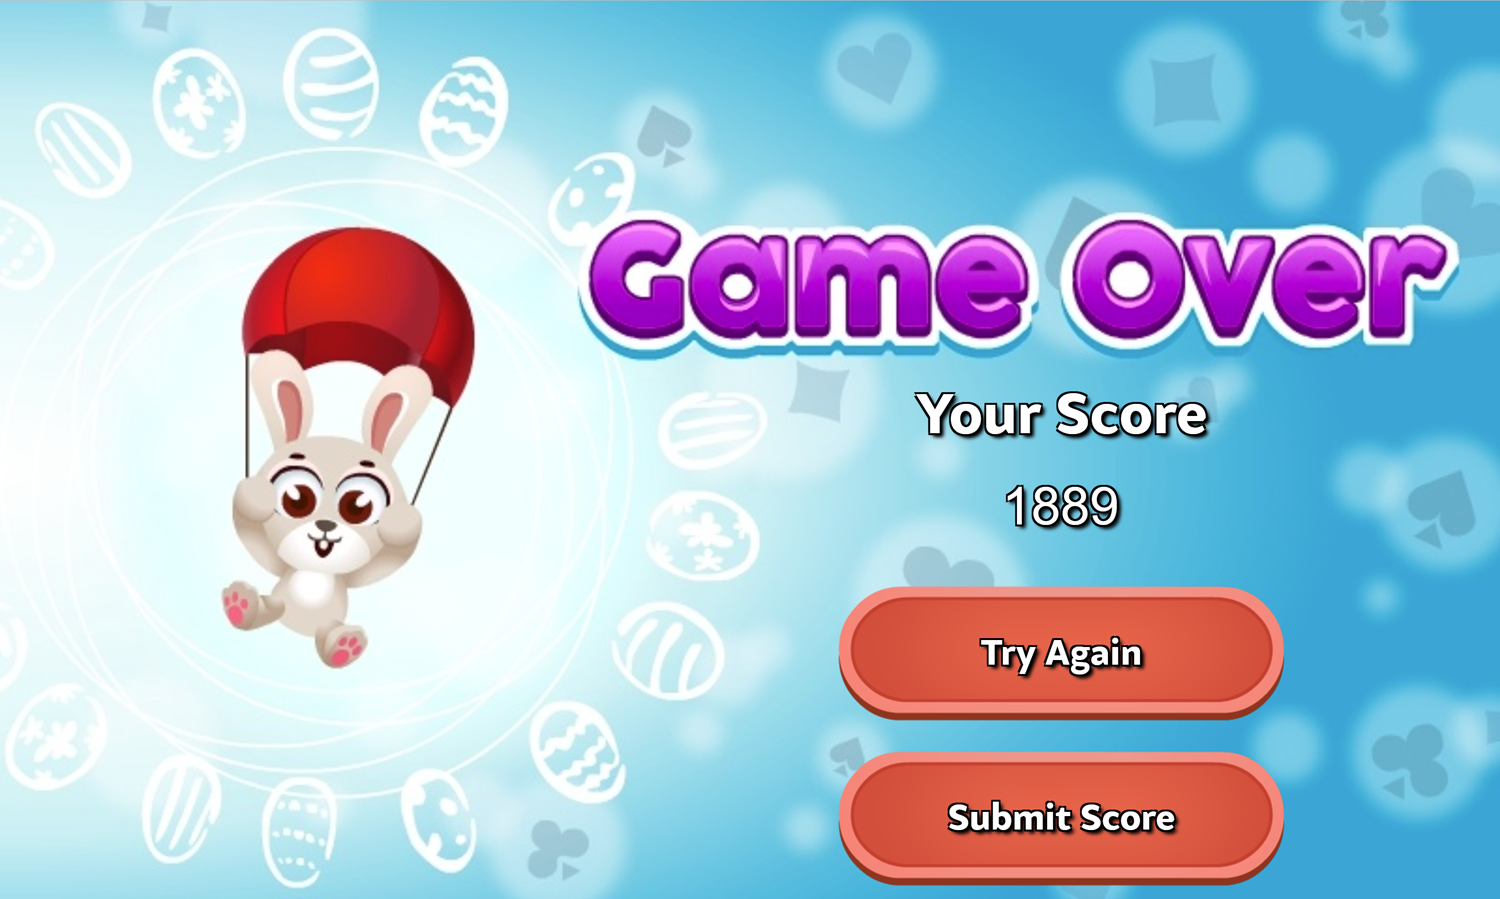 Bunny Solitaire Game Over Screen Screenshot.